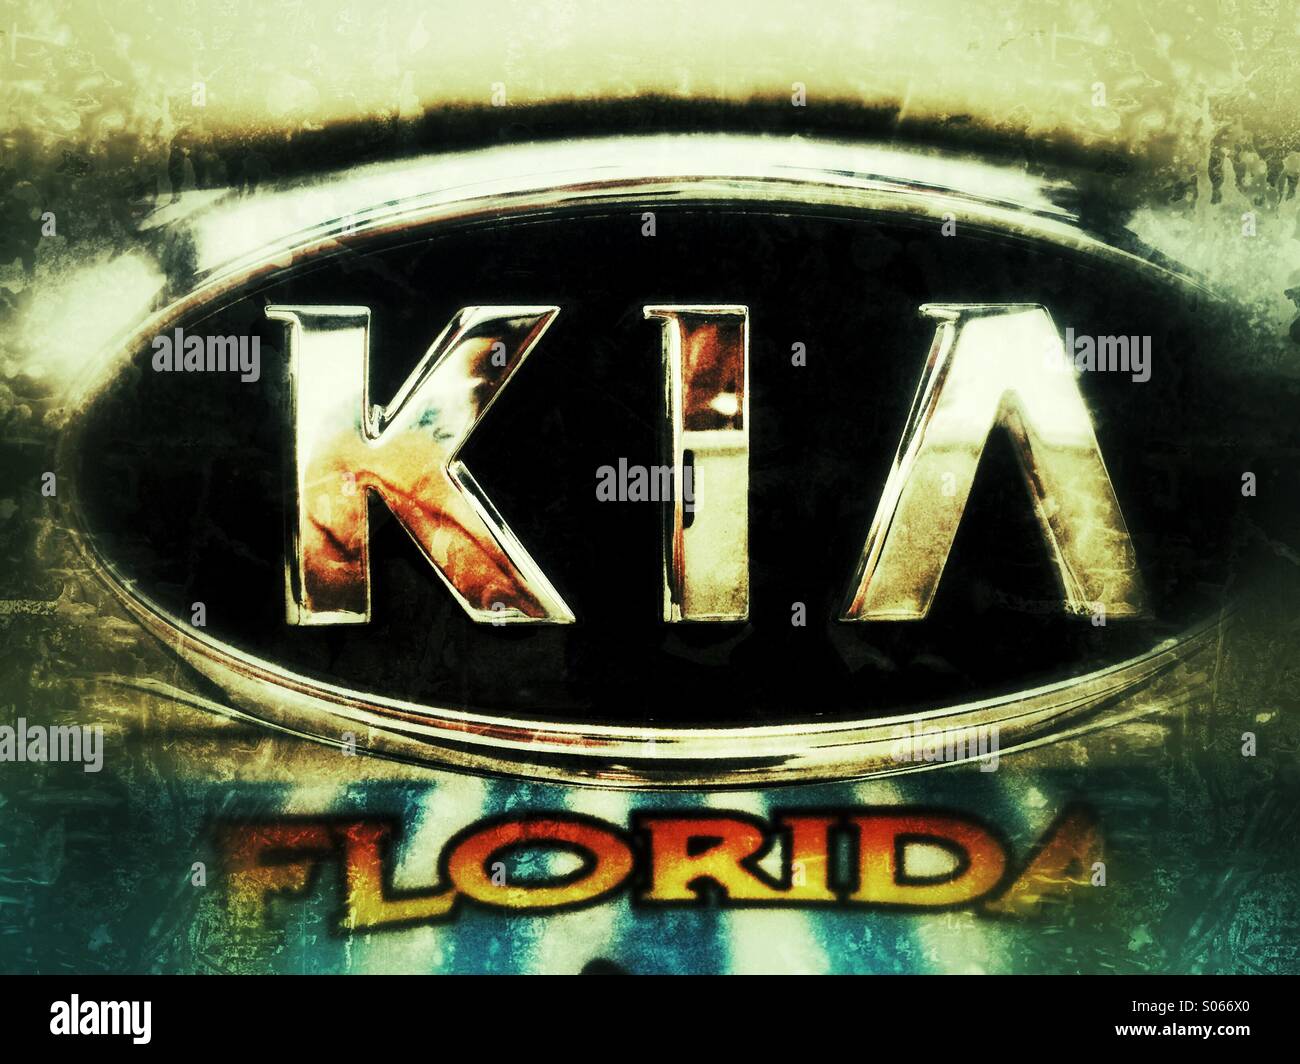 KIA logo and a Florida licence plate. Stock Photo